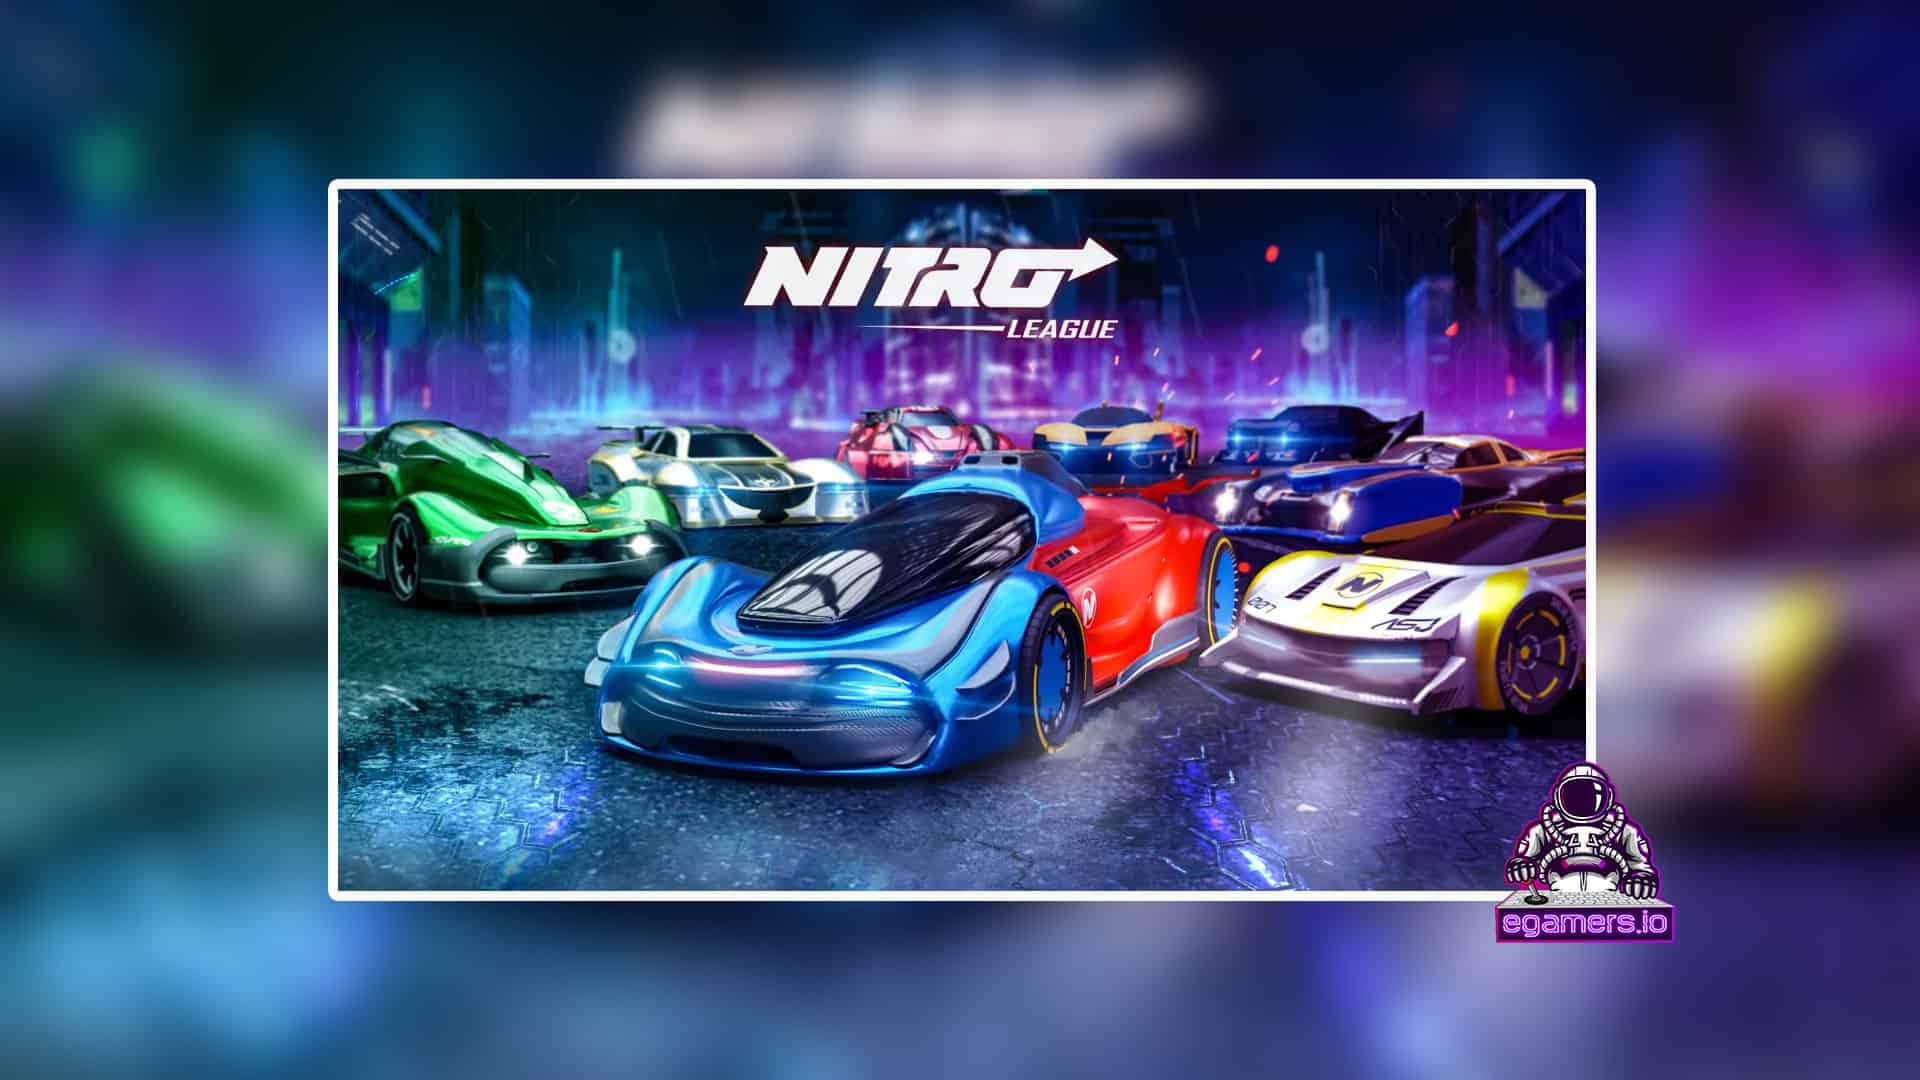 Nitro League Racing Game to Launch Tomorrow, April 2nd